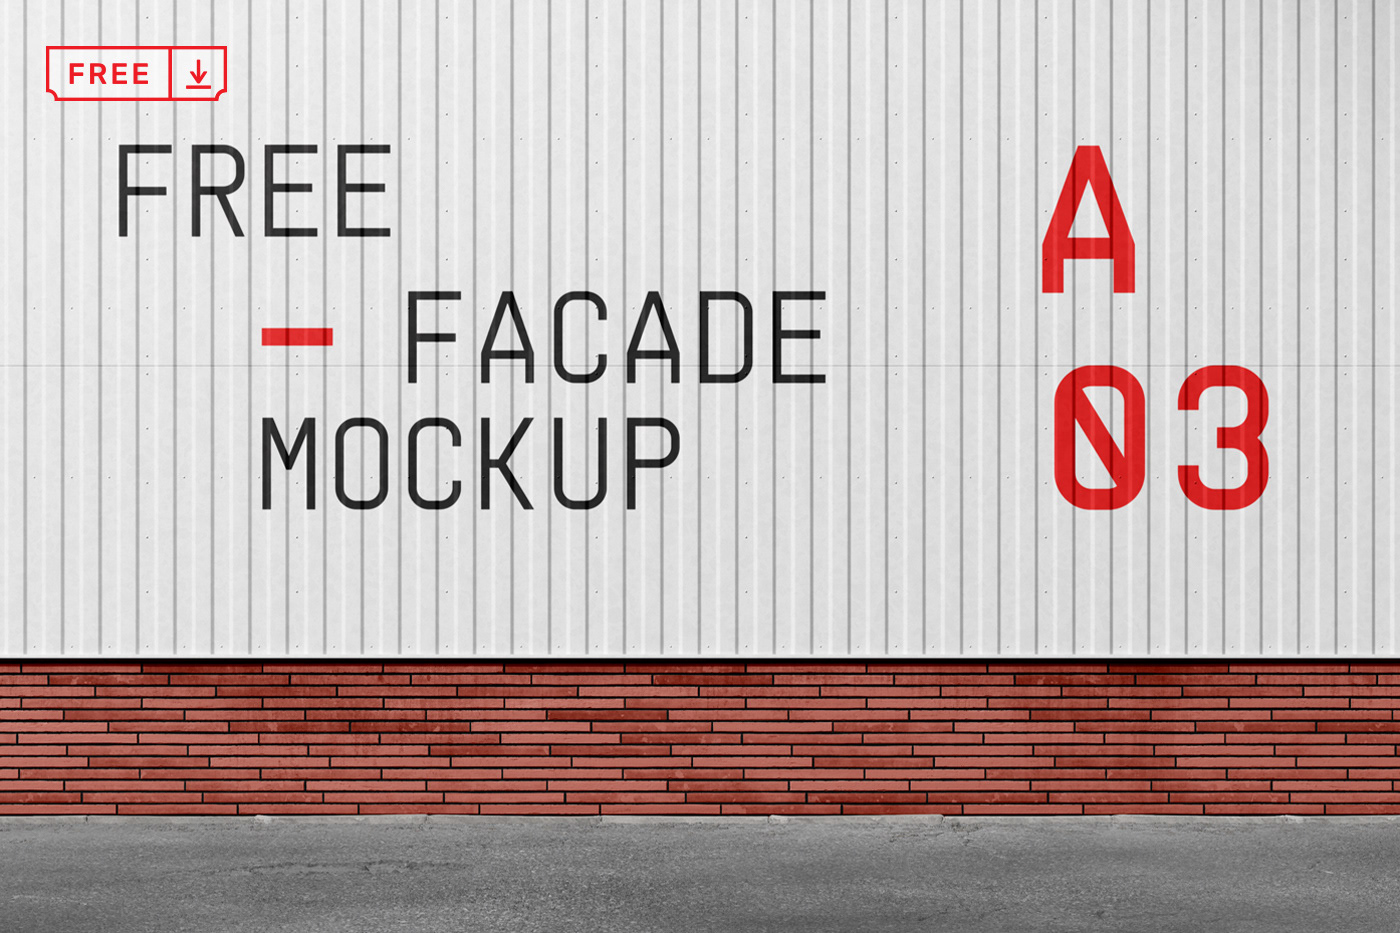 Facade Mockup free mockup  freebies metal facade wall mockup wayfinding mockup free psd Free Template freedownload